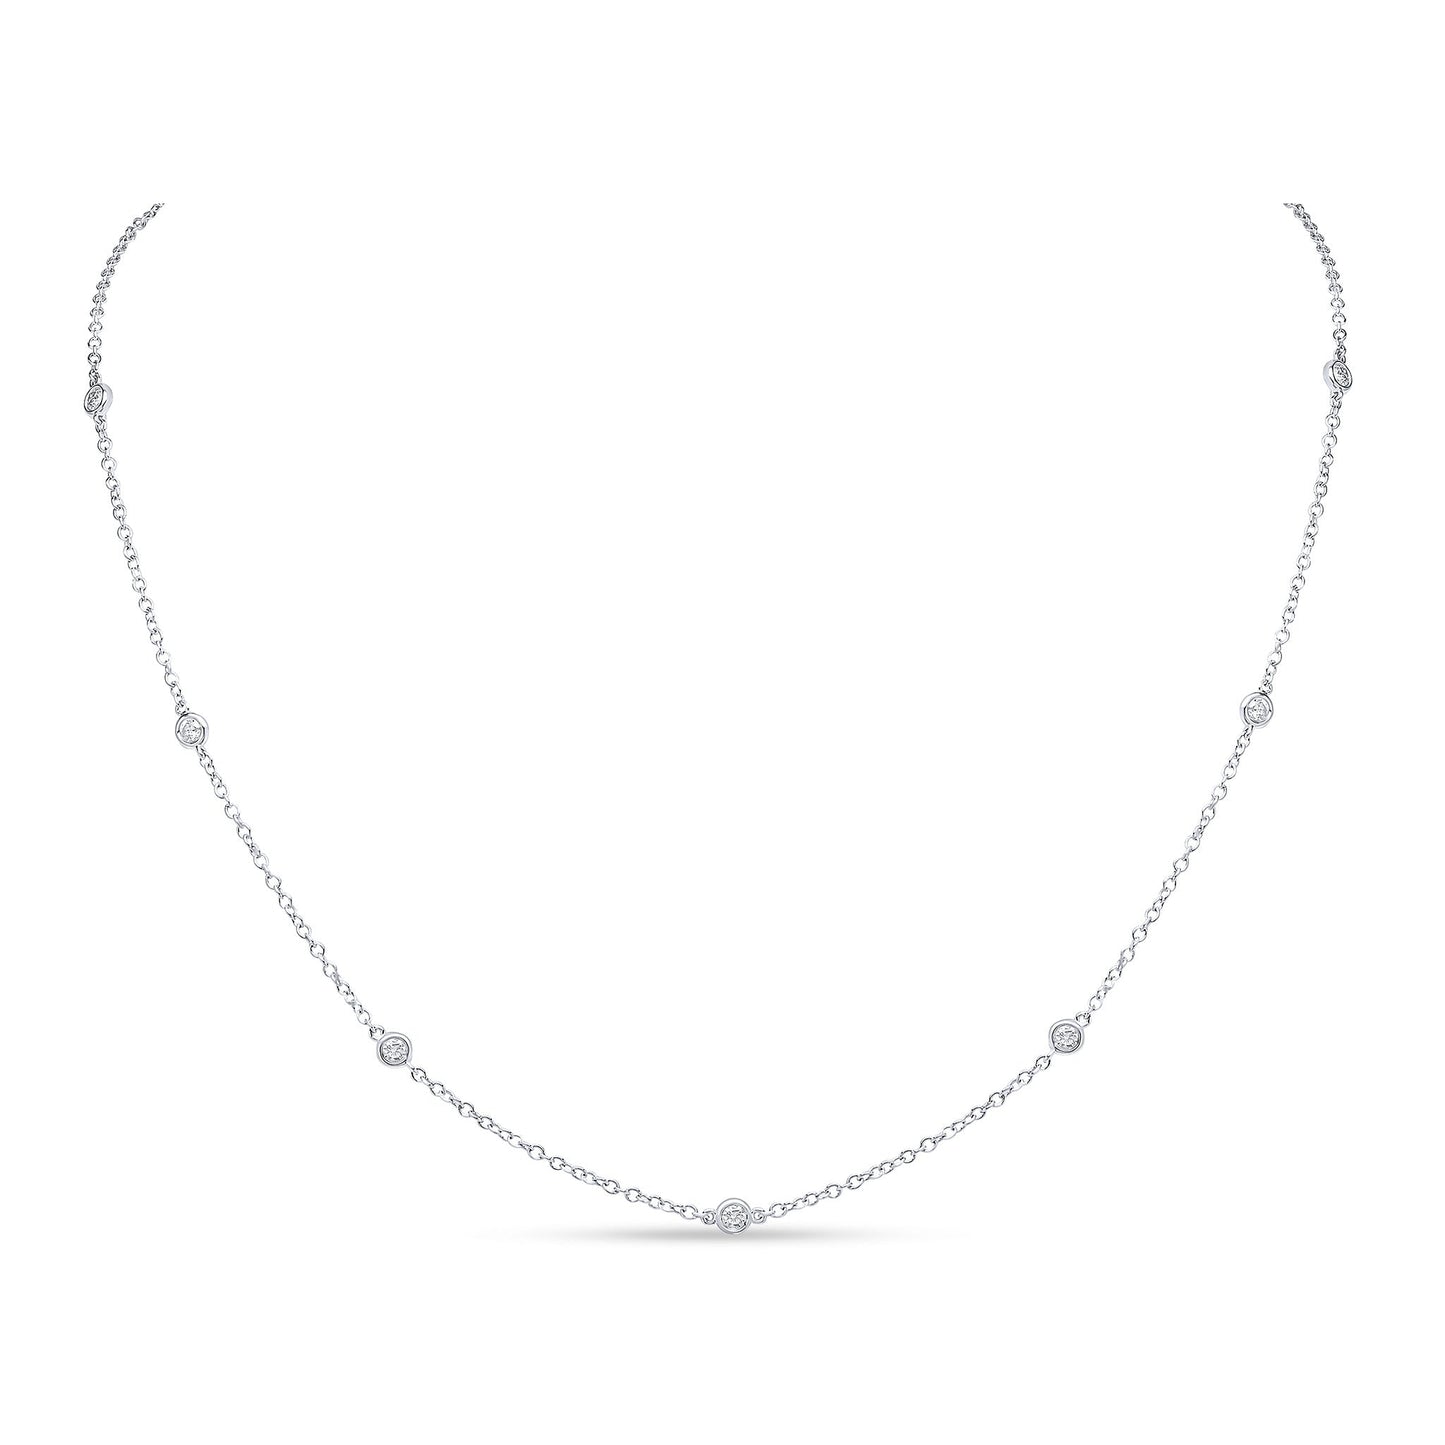 18ct White Gold Round Diamond Spec Set Chain Necklace. 18"